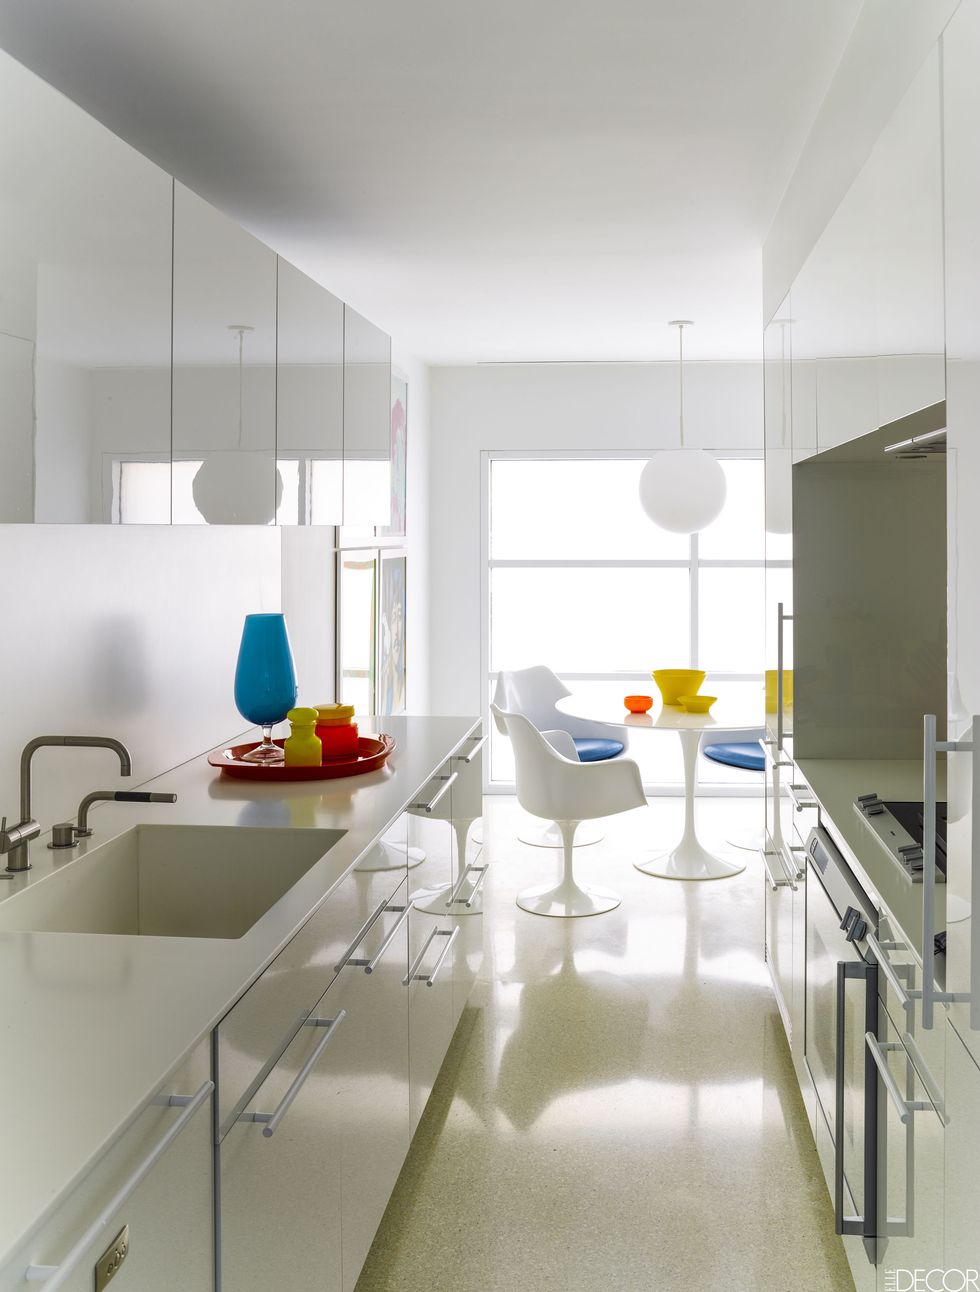 Room, Interior design, Architecture, Kitchen sink, White, Floor, Plumbing fixture, Ceiling, Glass, Wall, 